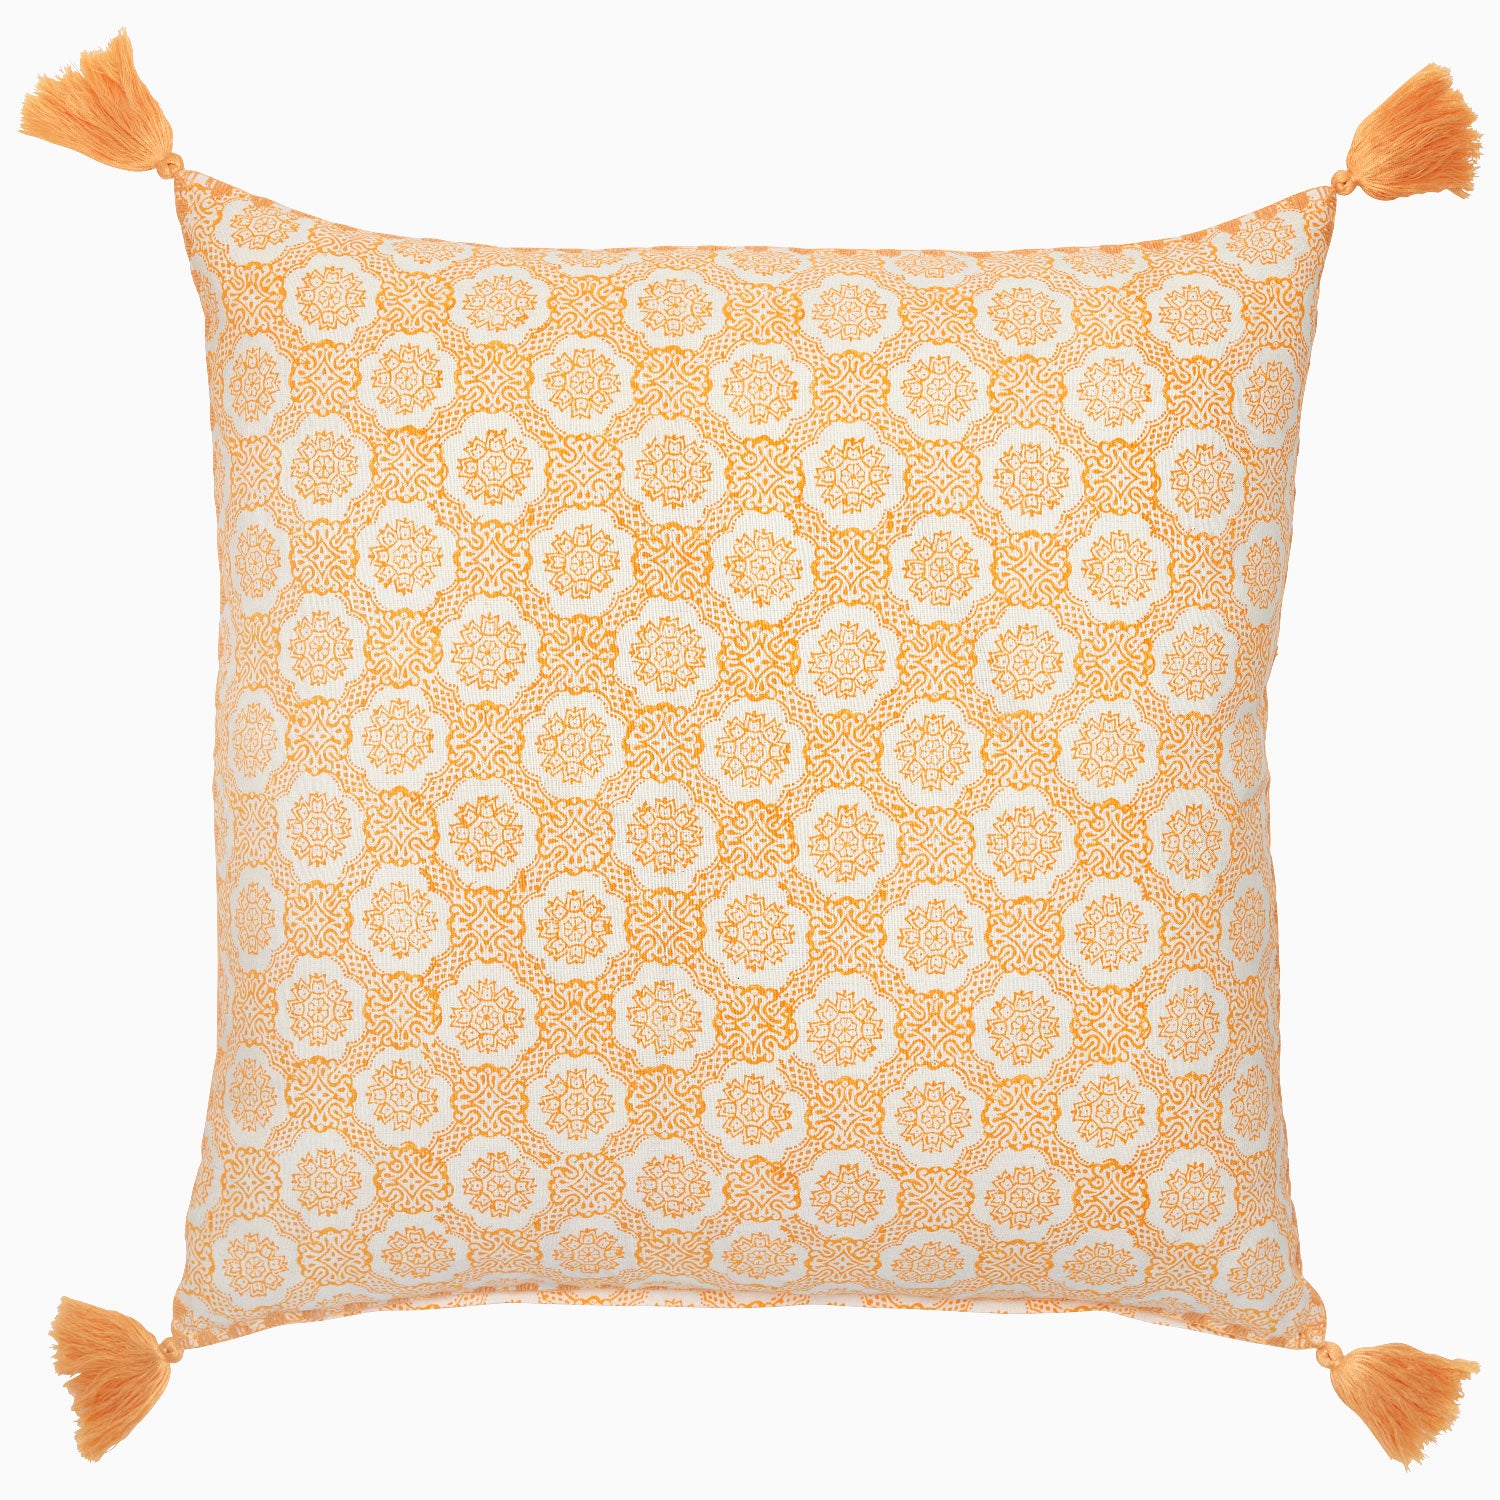 Atulya Marigold Decorative Pillow Main